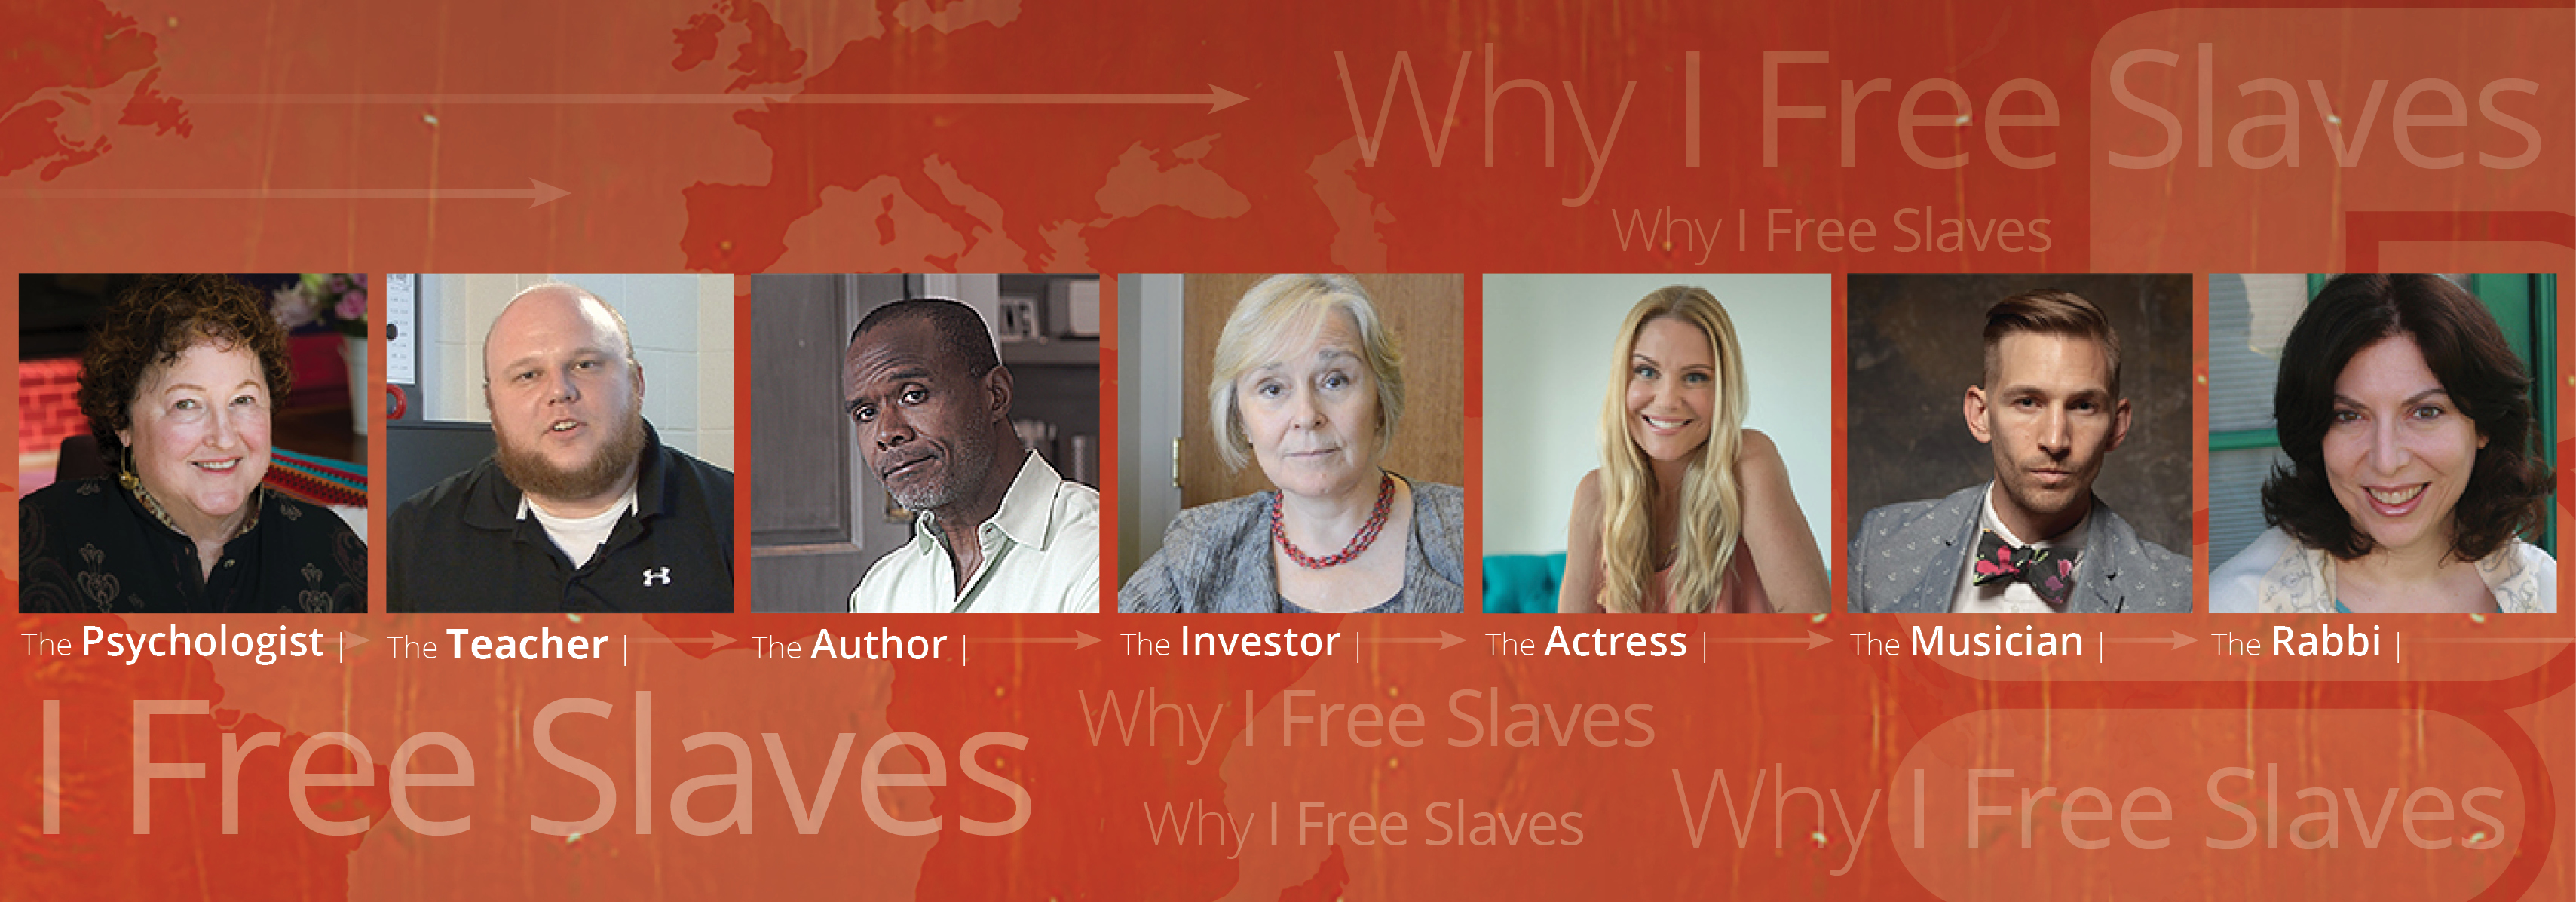 Why I Free Slaves: Investor Margaret Graff